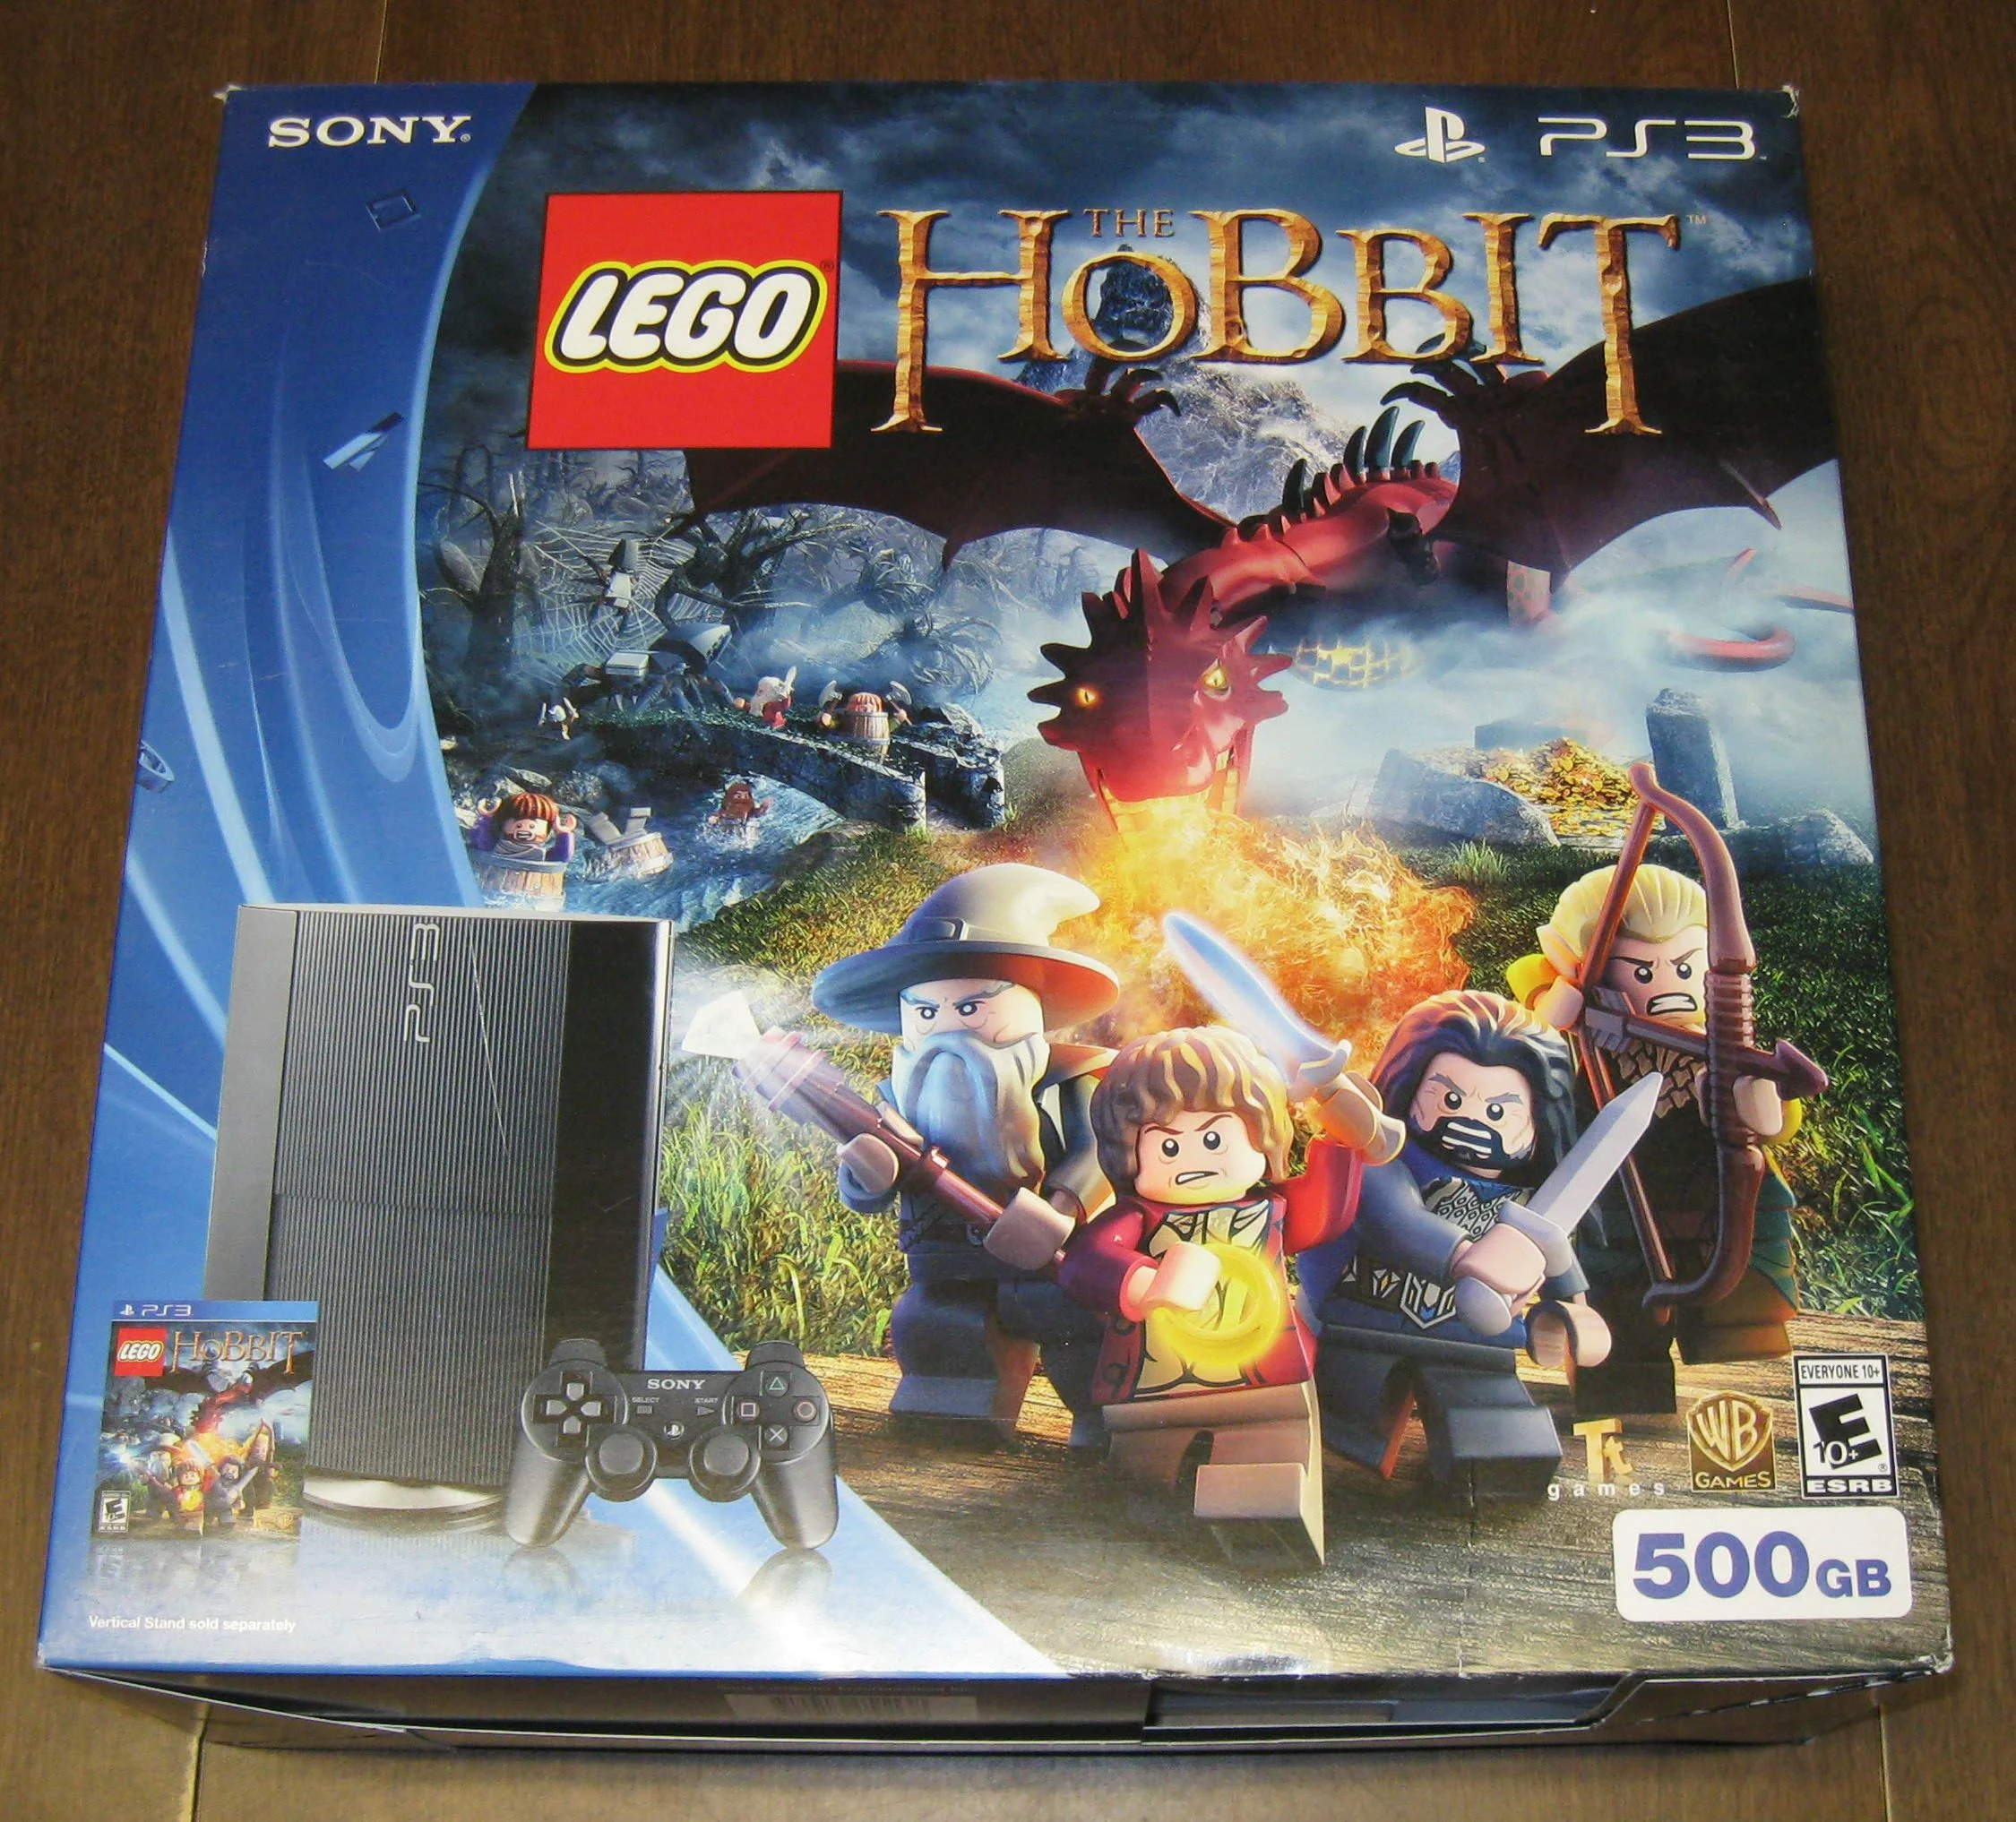  Sony PlayStation 3 Super Slim Lego The Hobbit Bundle